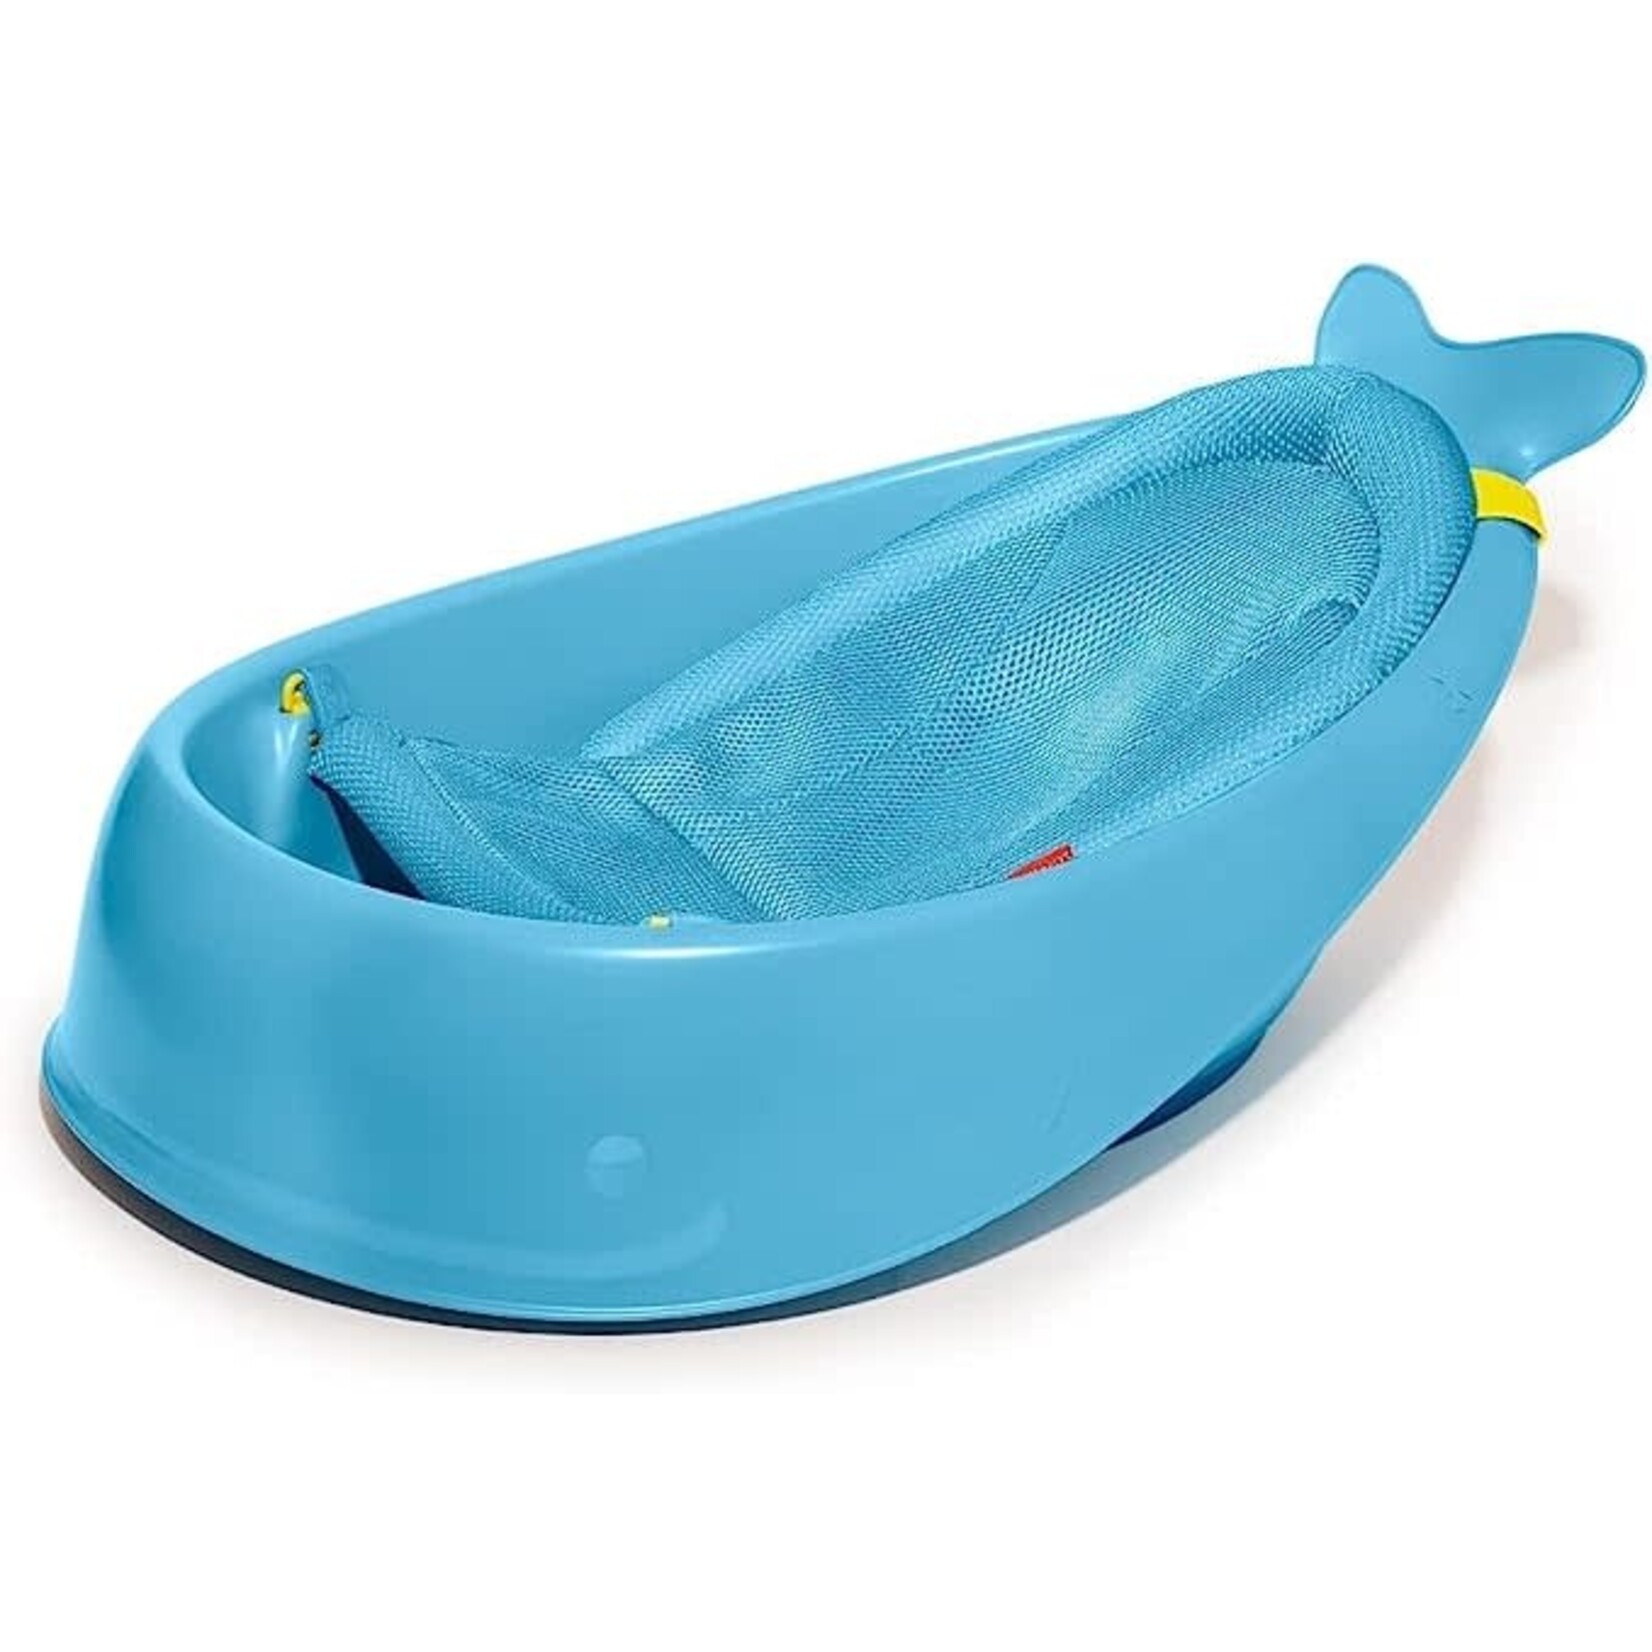 Skip hop - Moby wastafel badkuip - Blauw